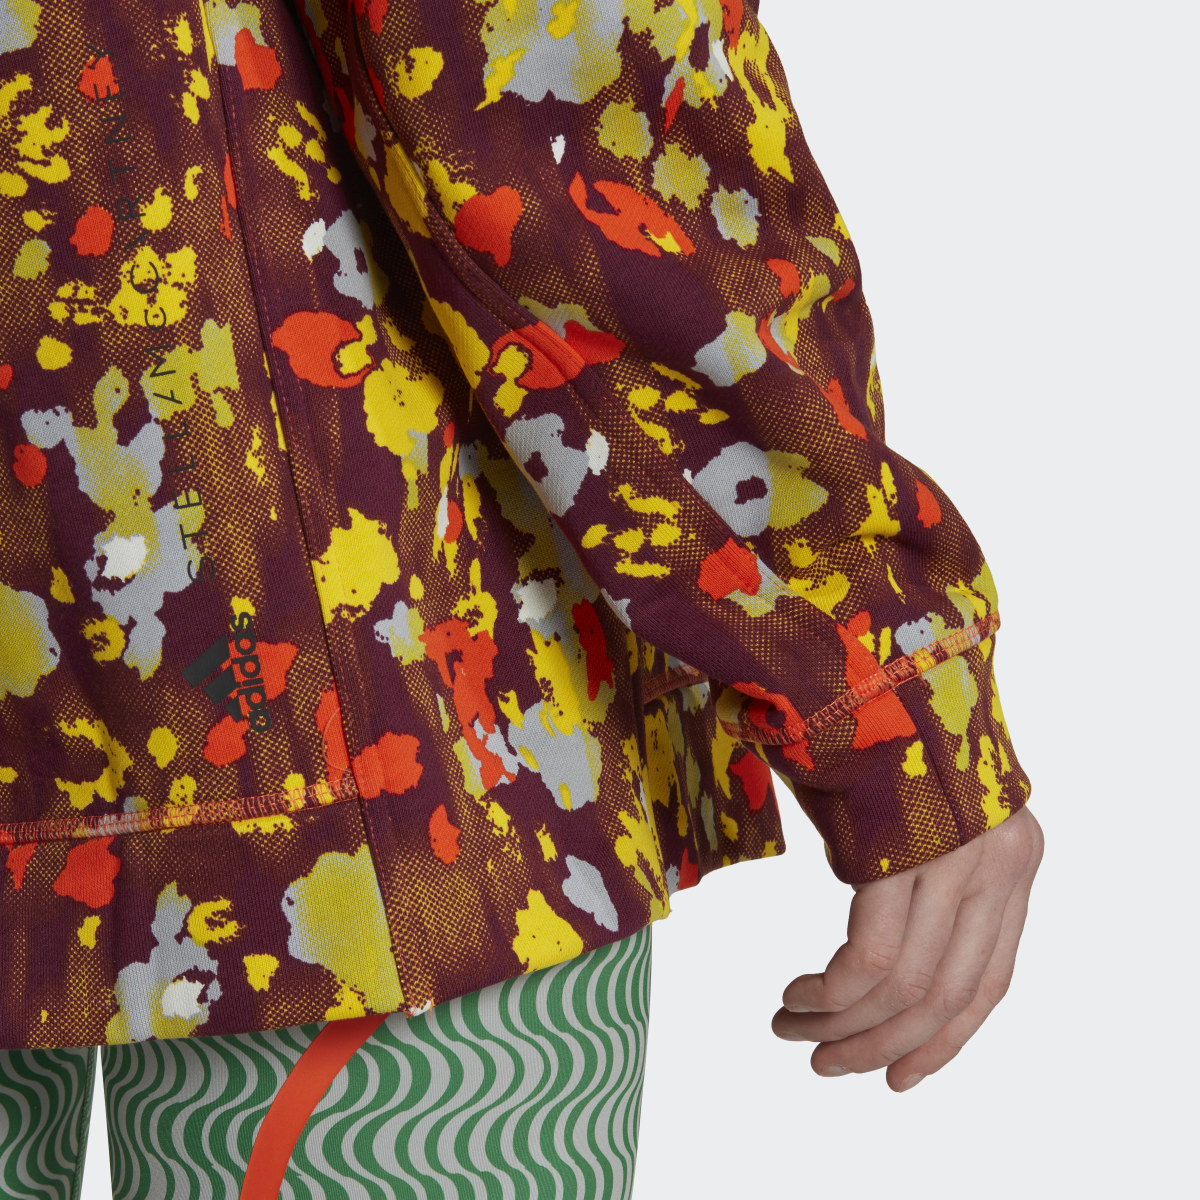 Adidas Sweat-shirt à imprimé floral adidas by Stella McCartney. 7